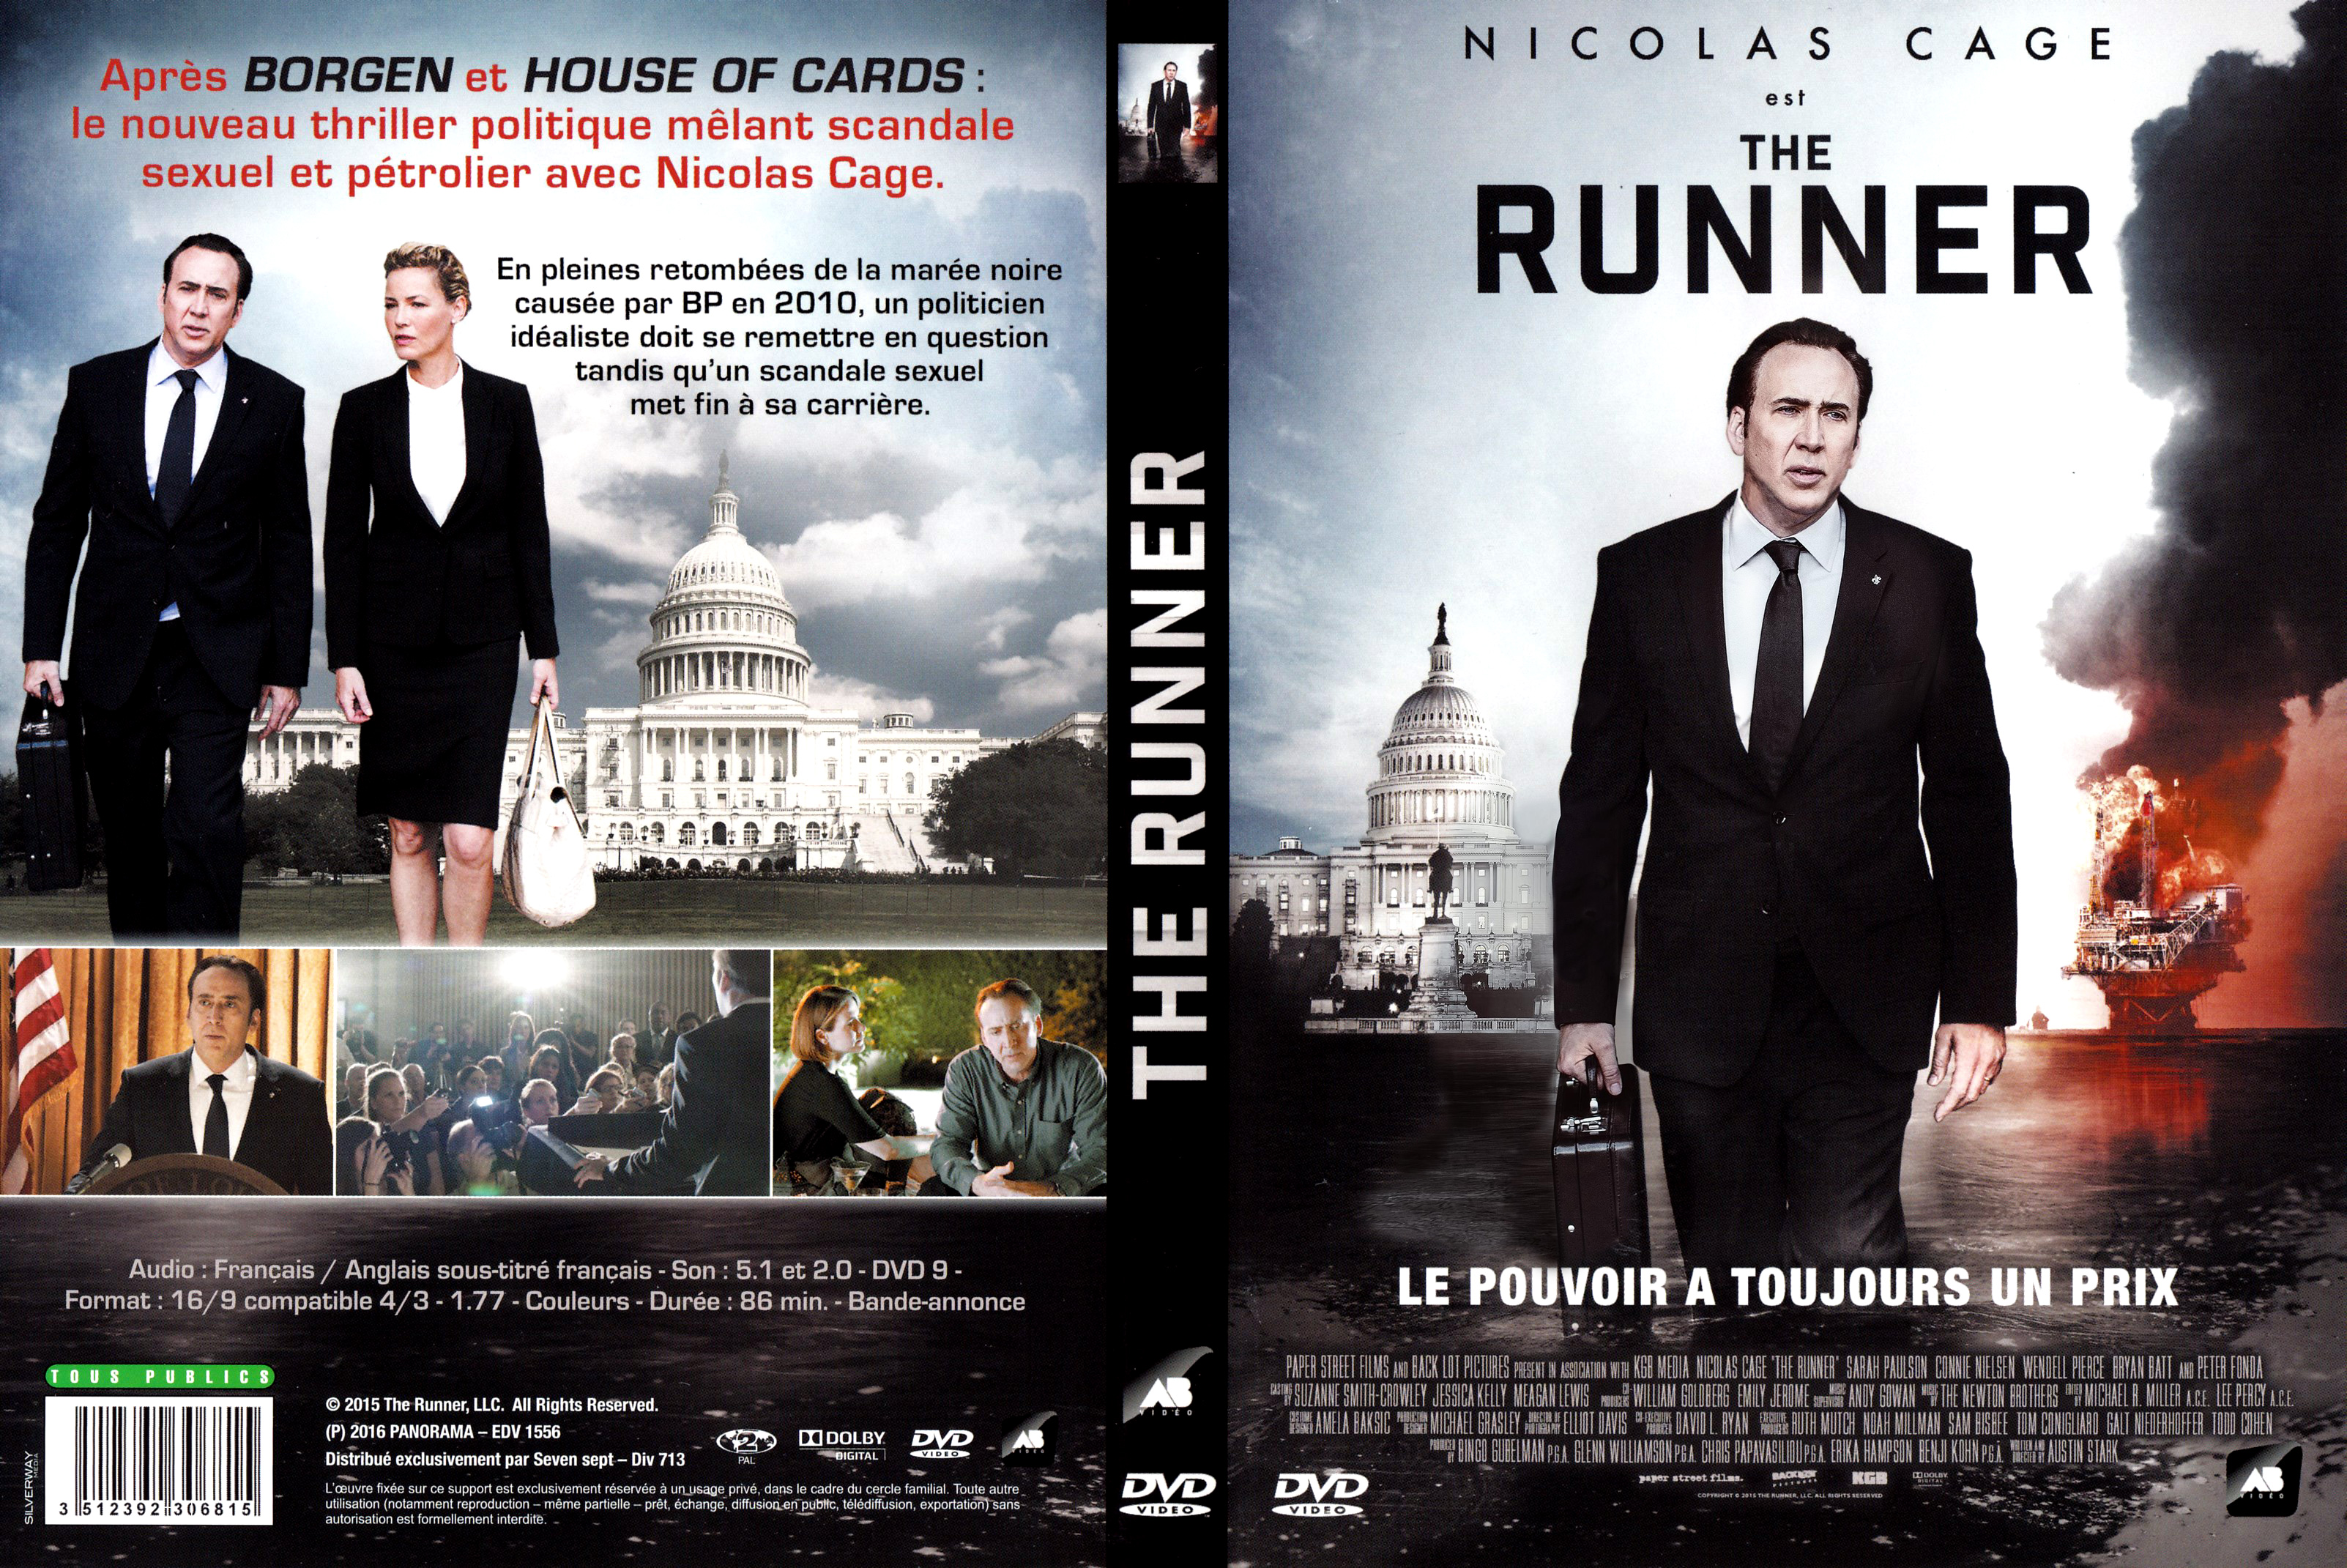 Jaquette DVD The runner (2016)